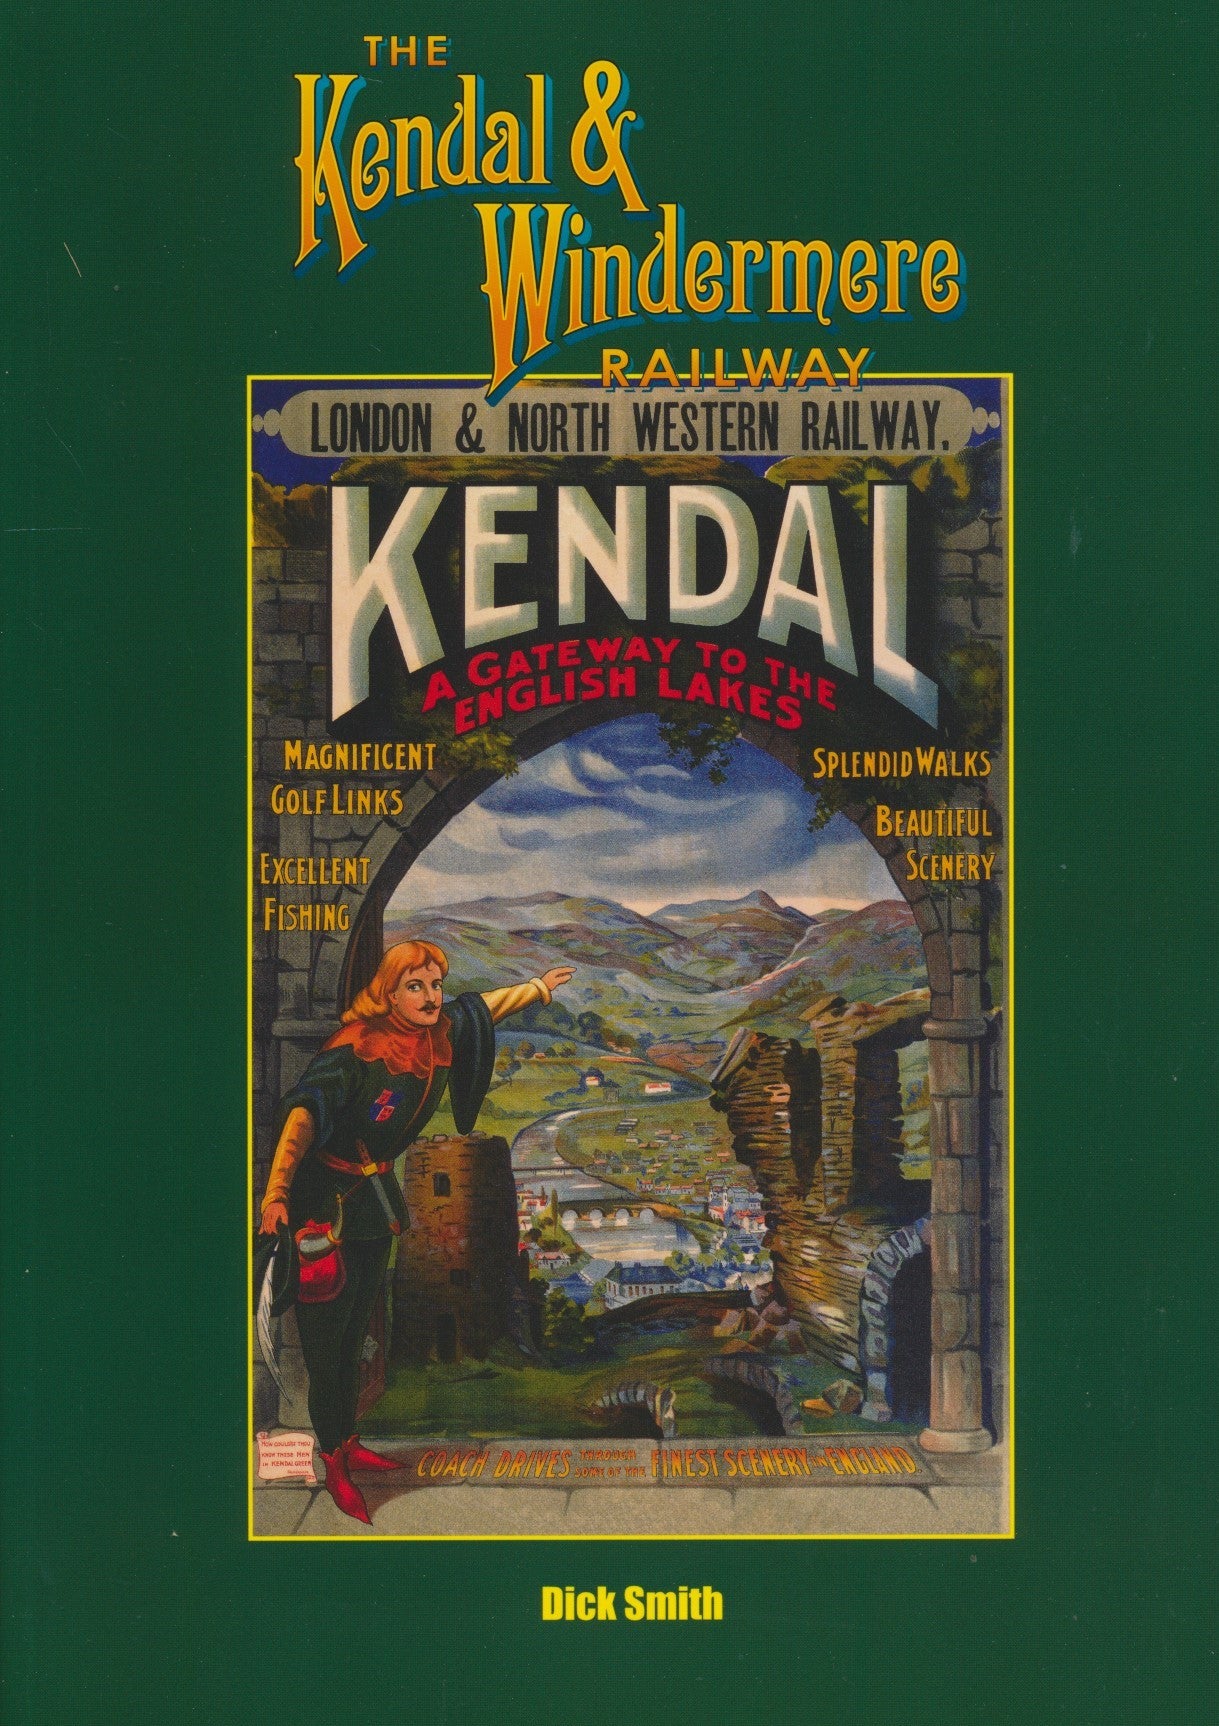 The Kendal & Windermere Railway